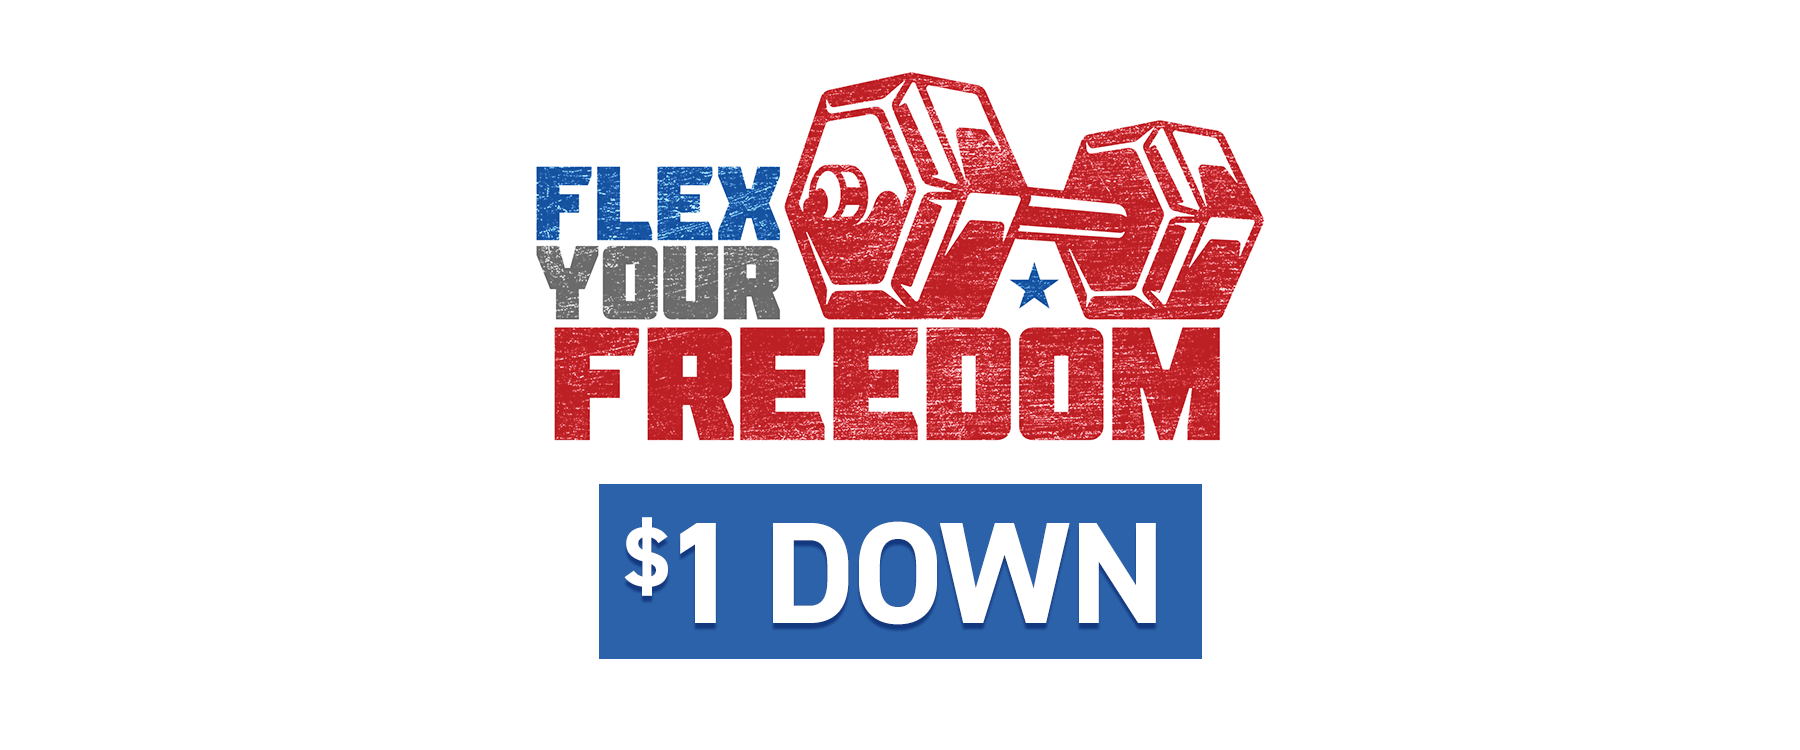 flex your freedom $1 down